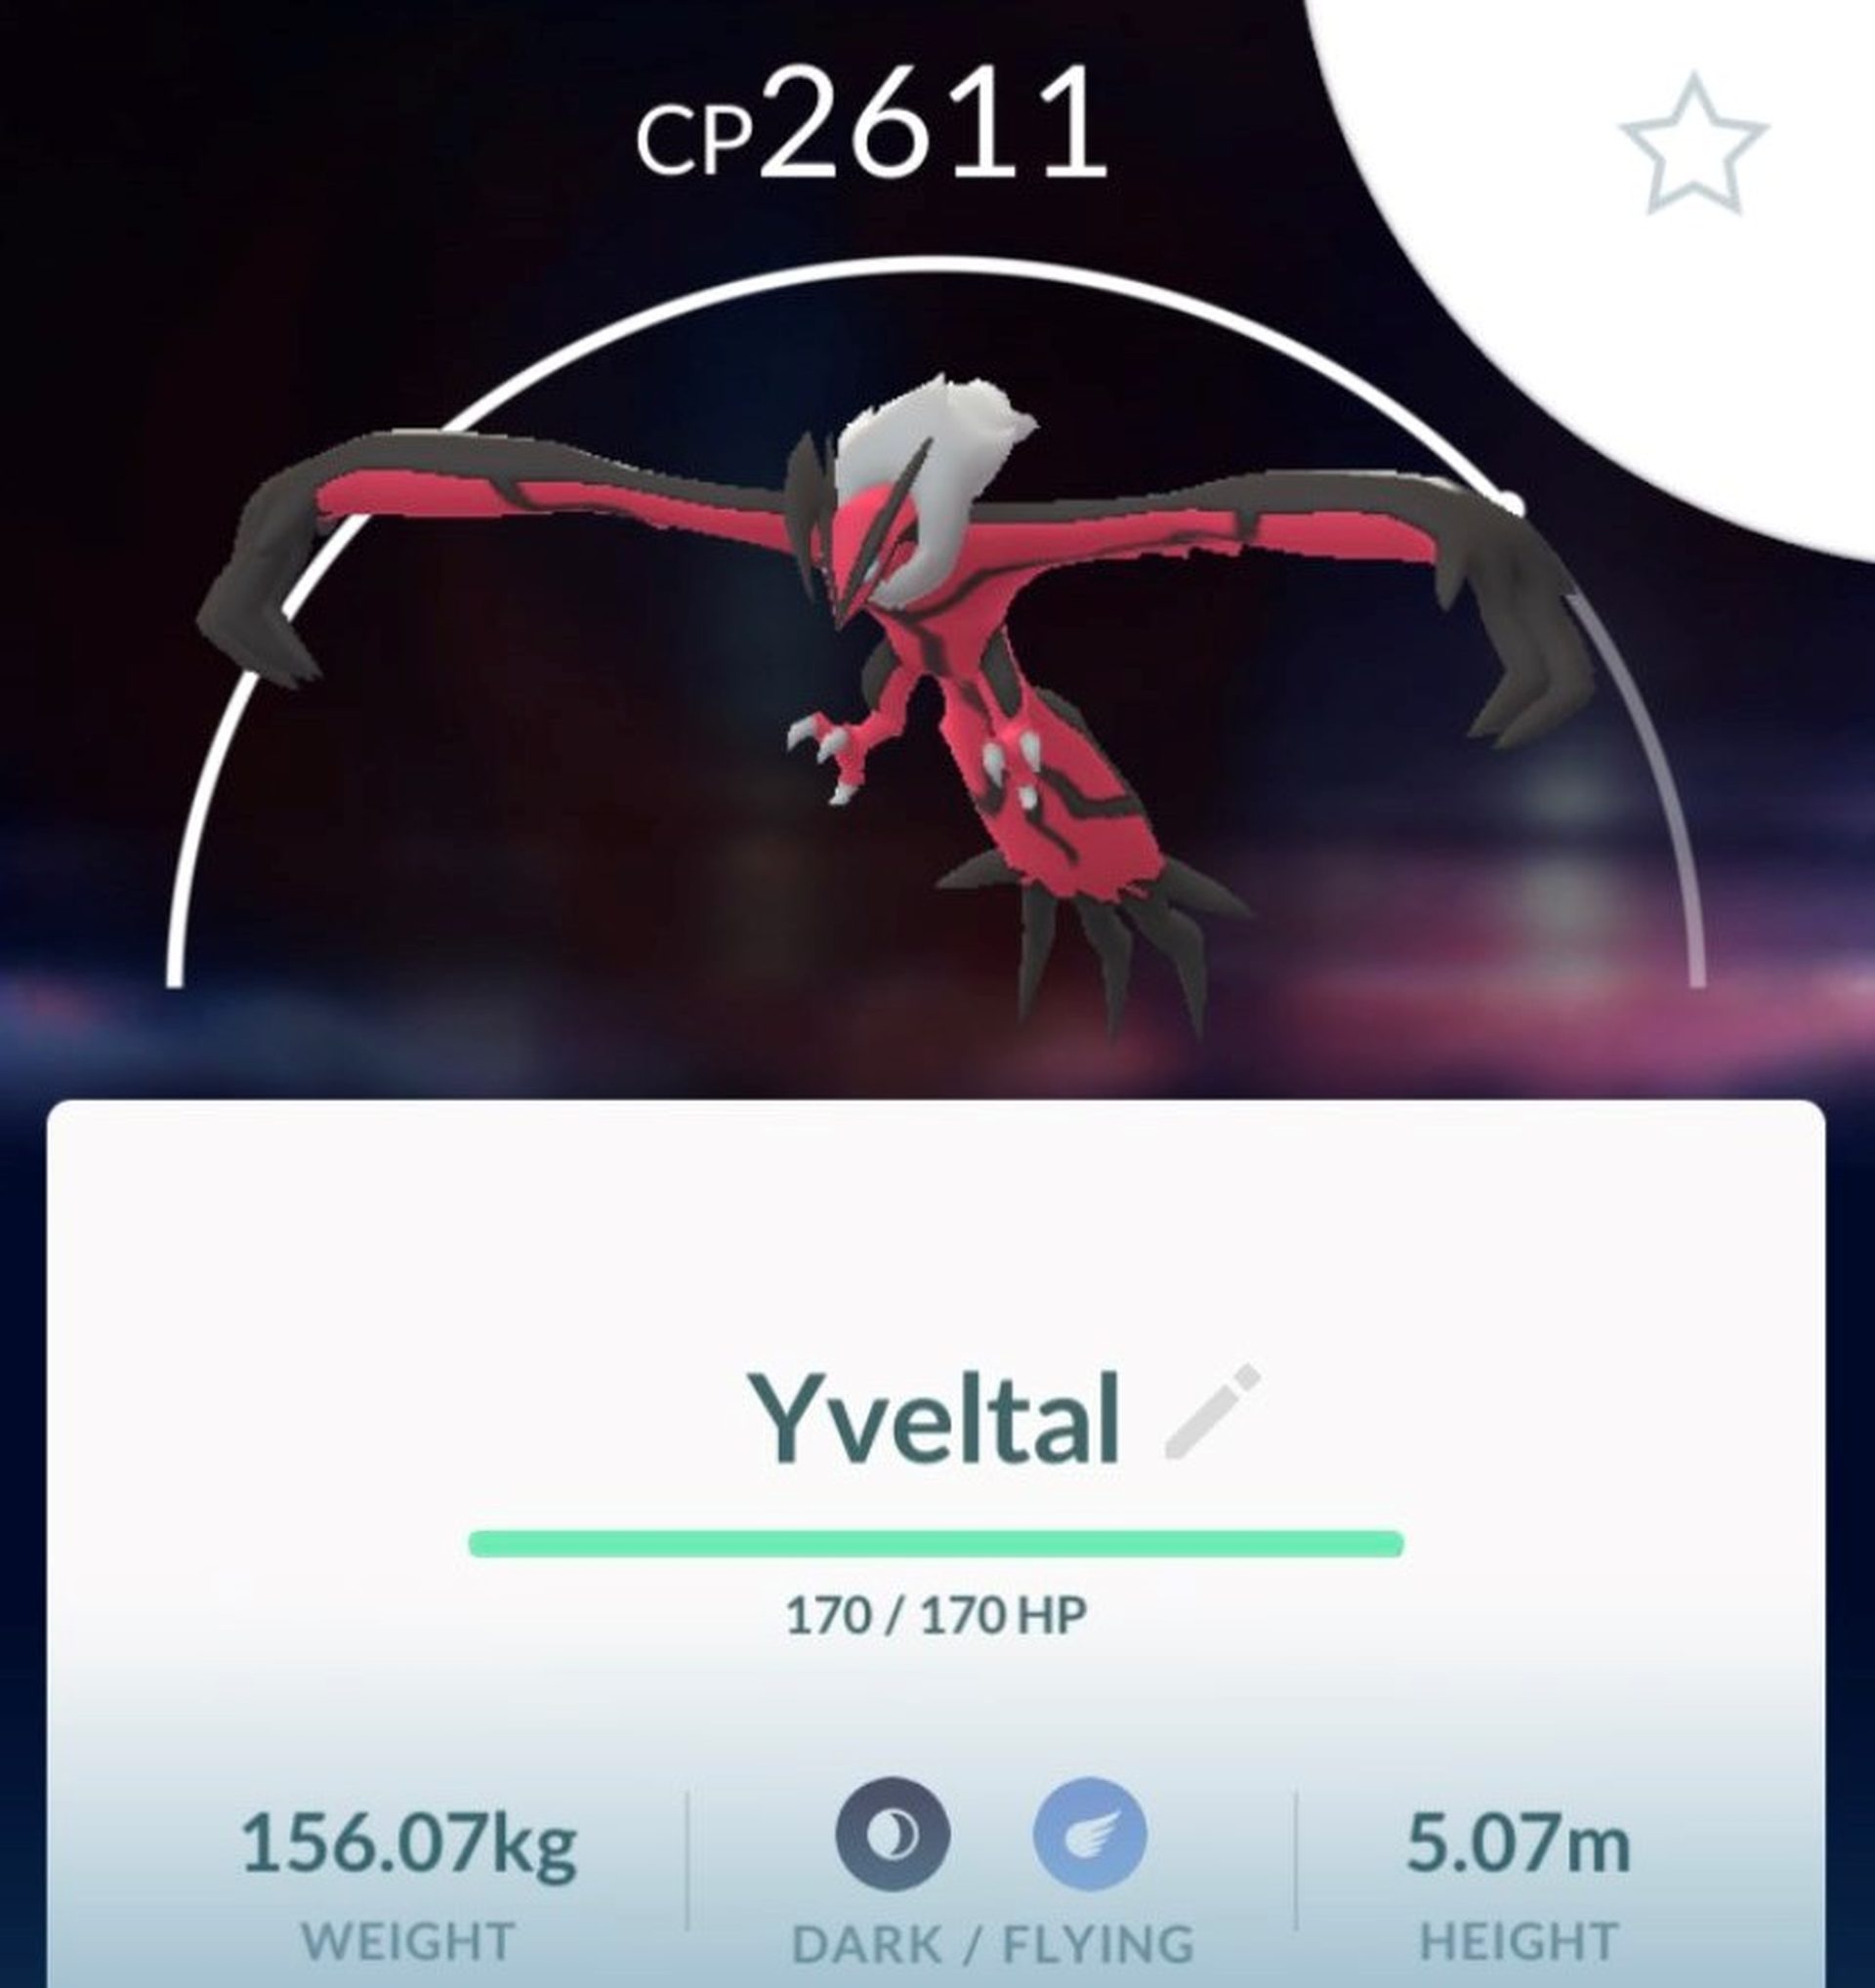 How to catch Yveltal in Pokemon Go?